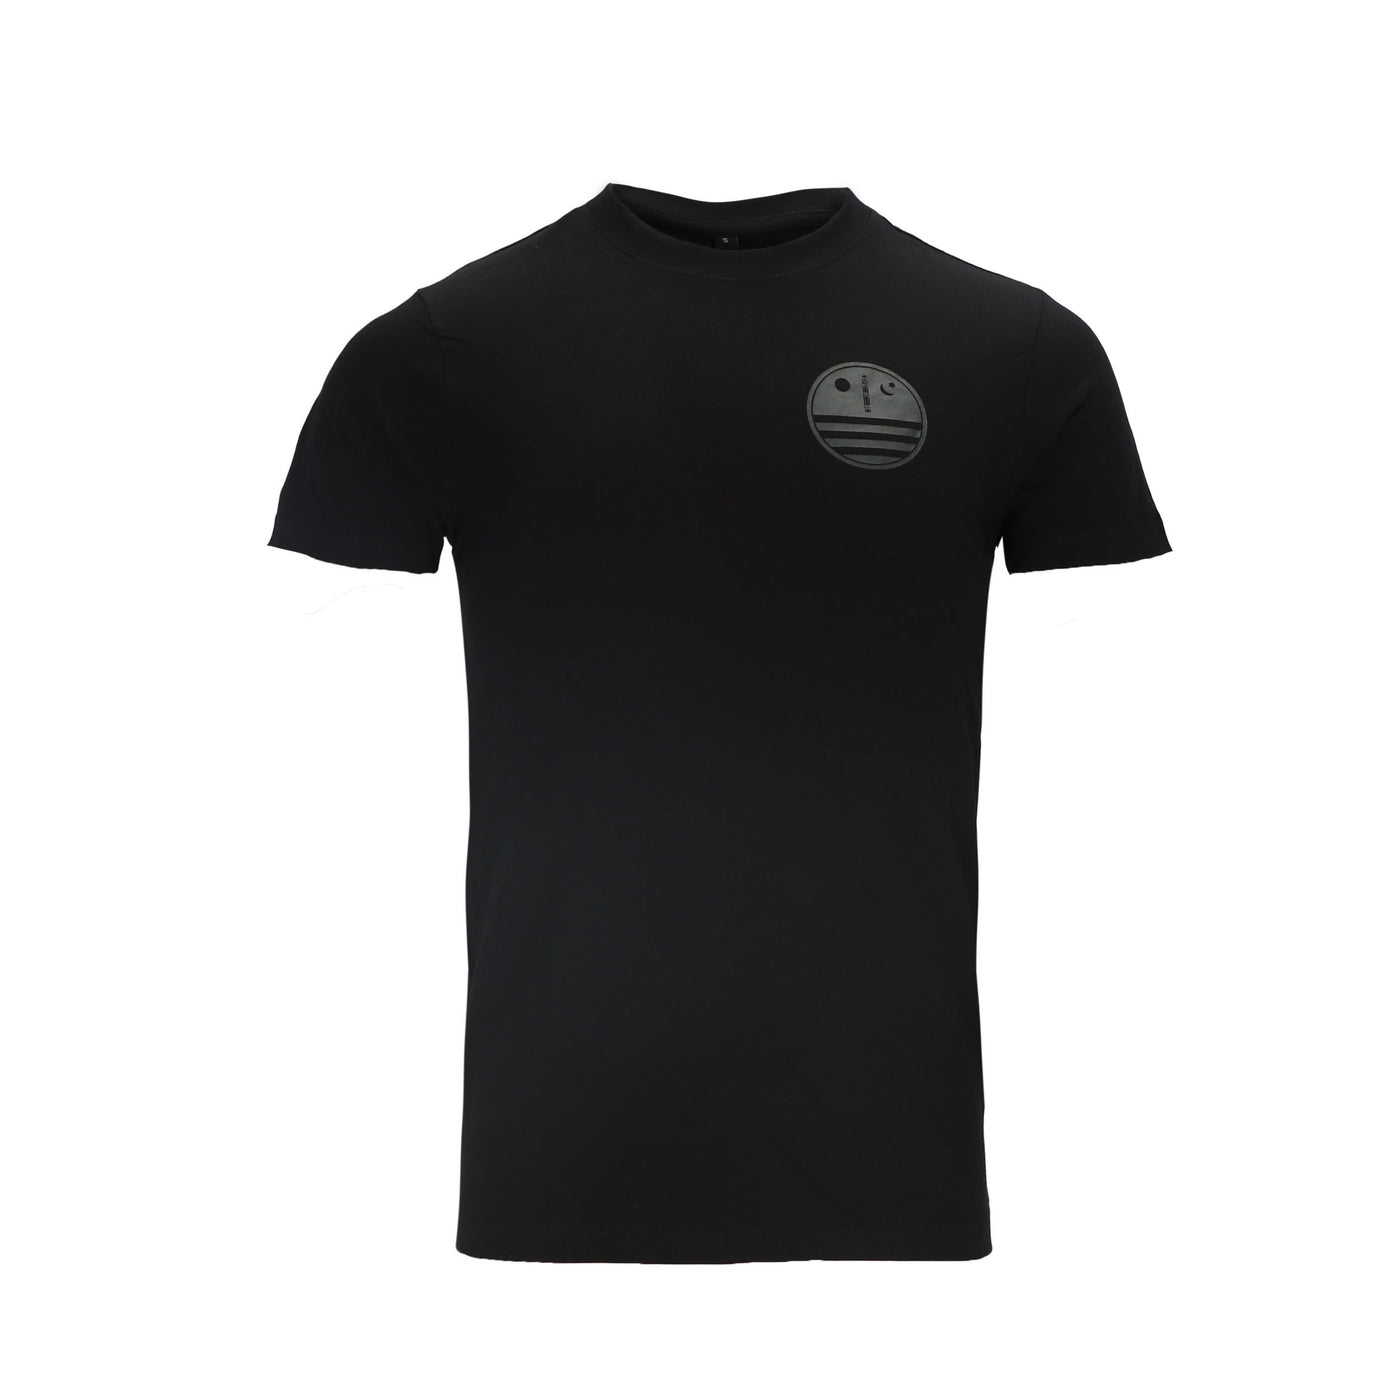 Black Sonderedition T-Shirt